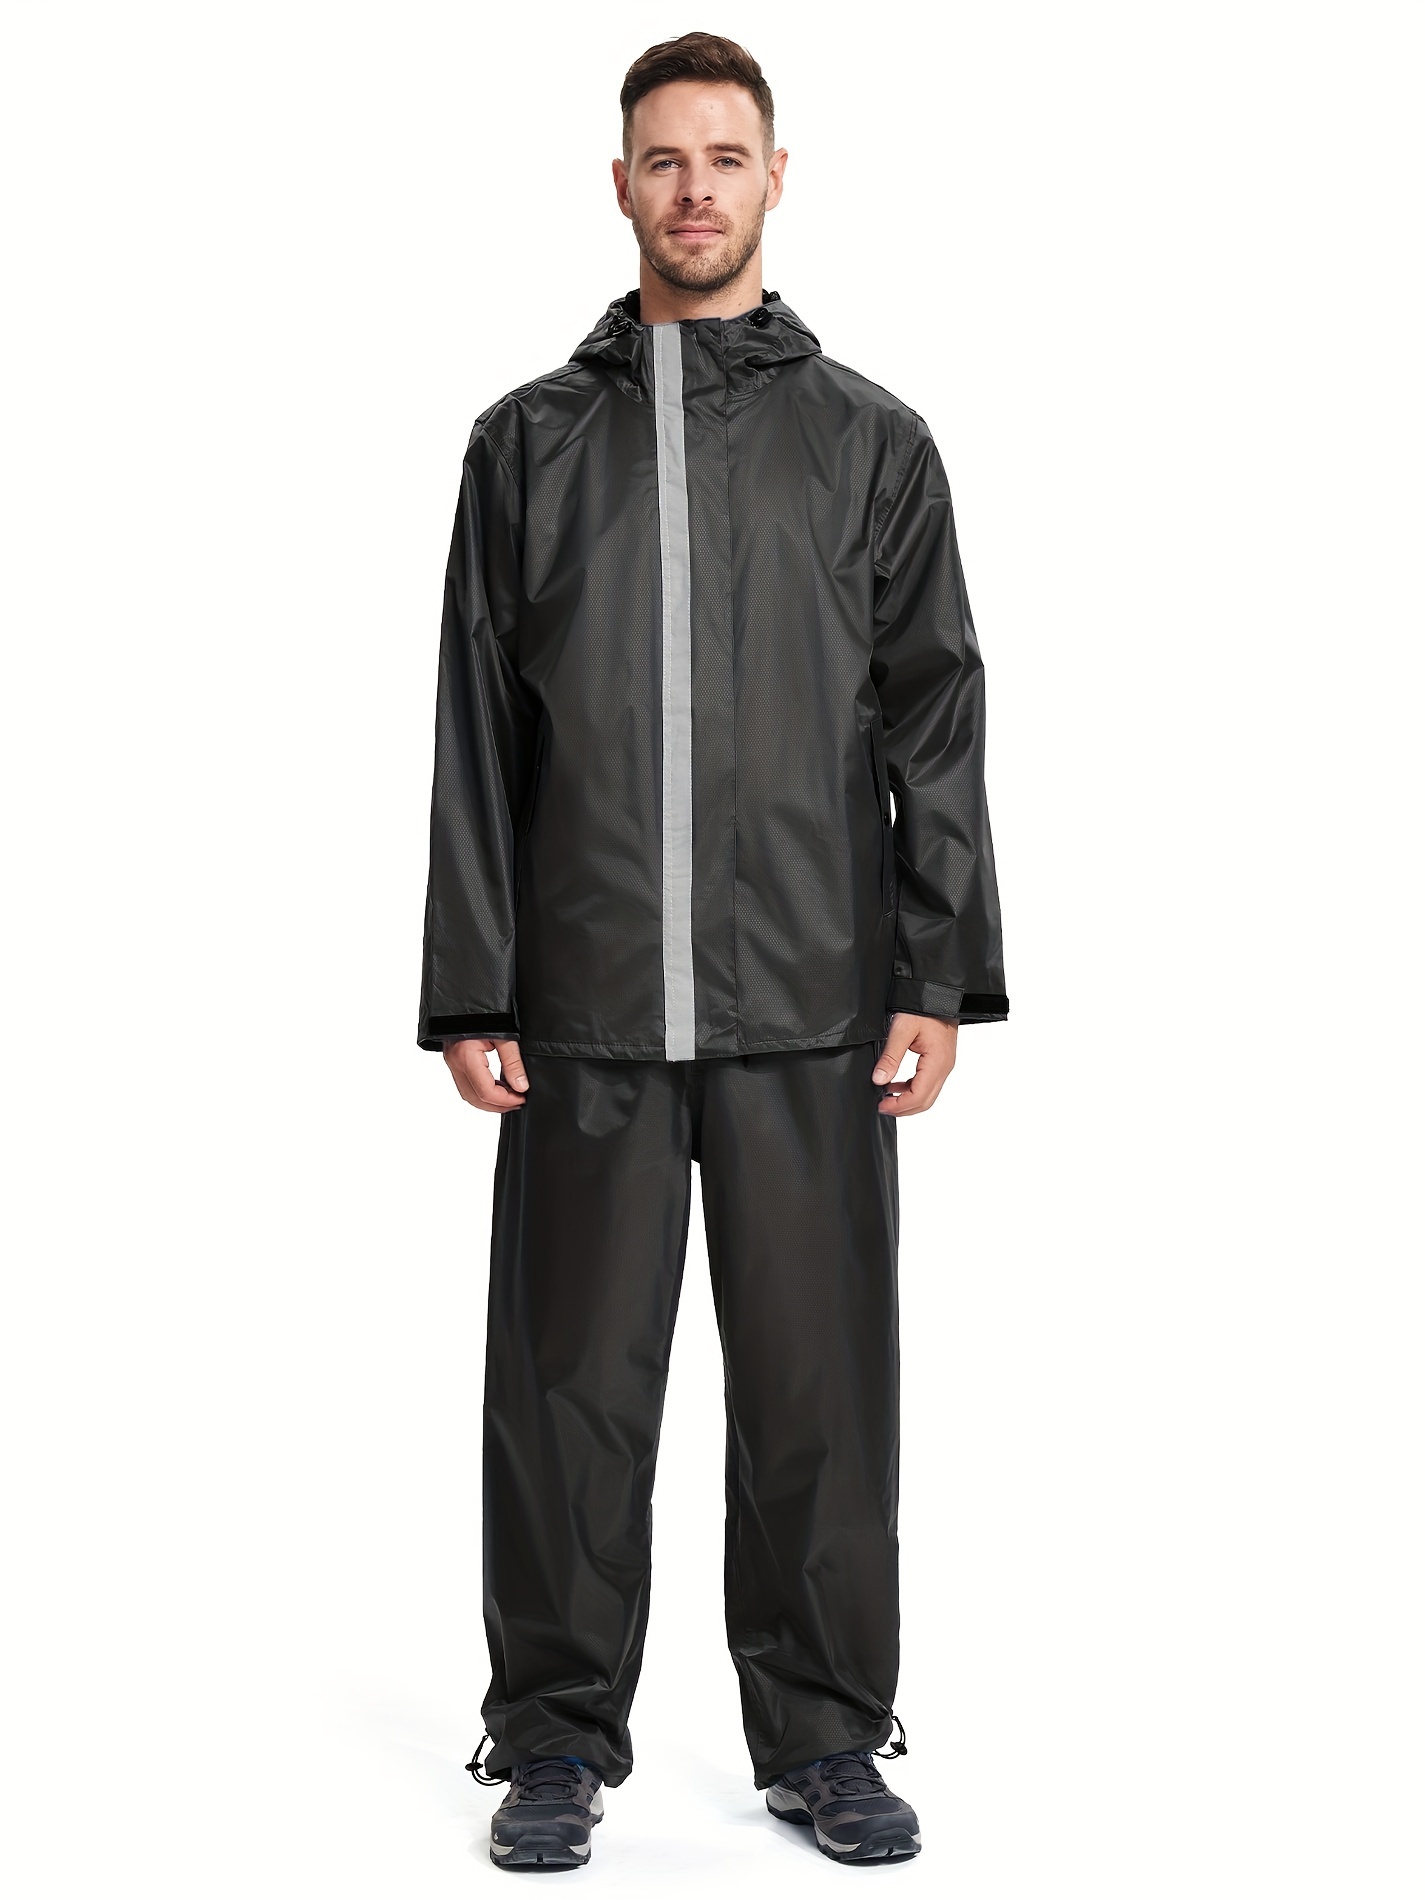 Sudadera con capucha de manga larga para hombre, chaqueta de trabajo con  tira reflectante, ropa deportiva de alta visibilidad, a la moda - AliExpress